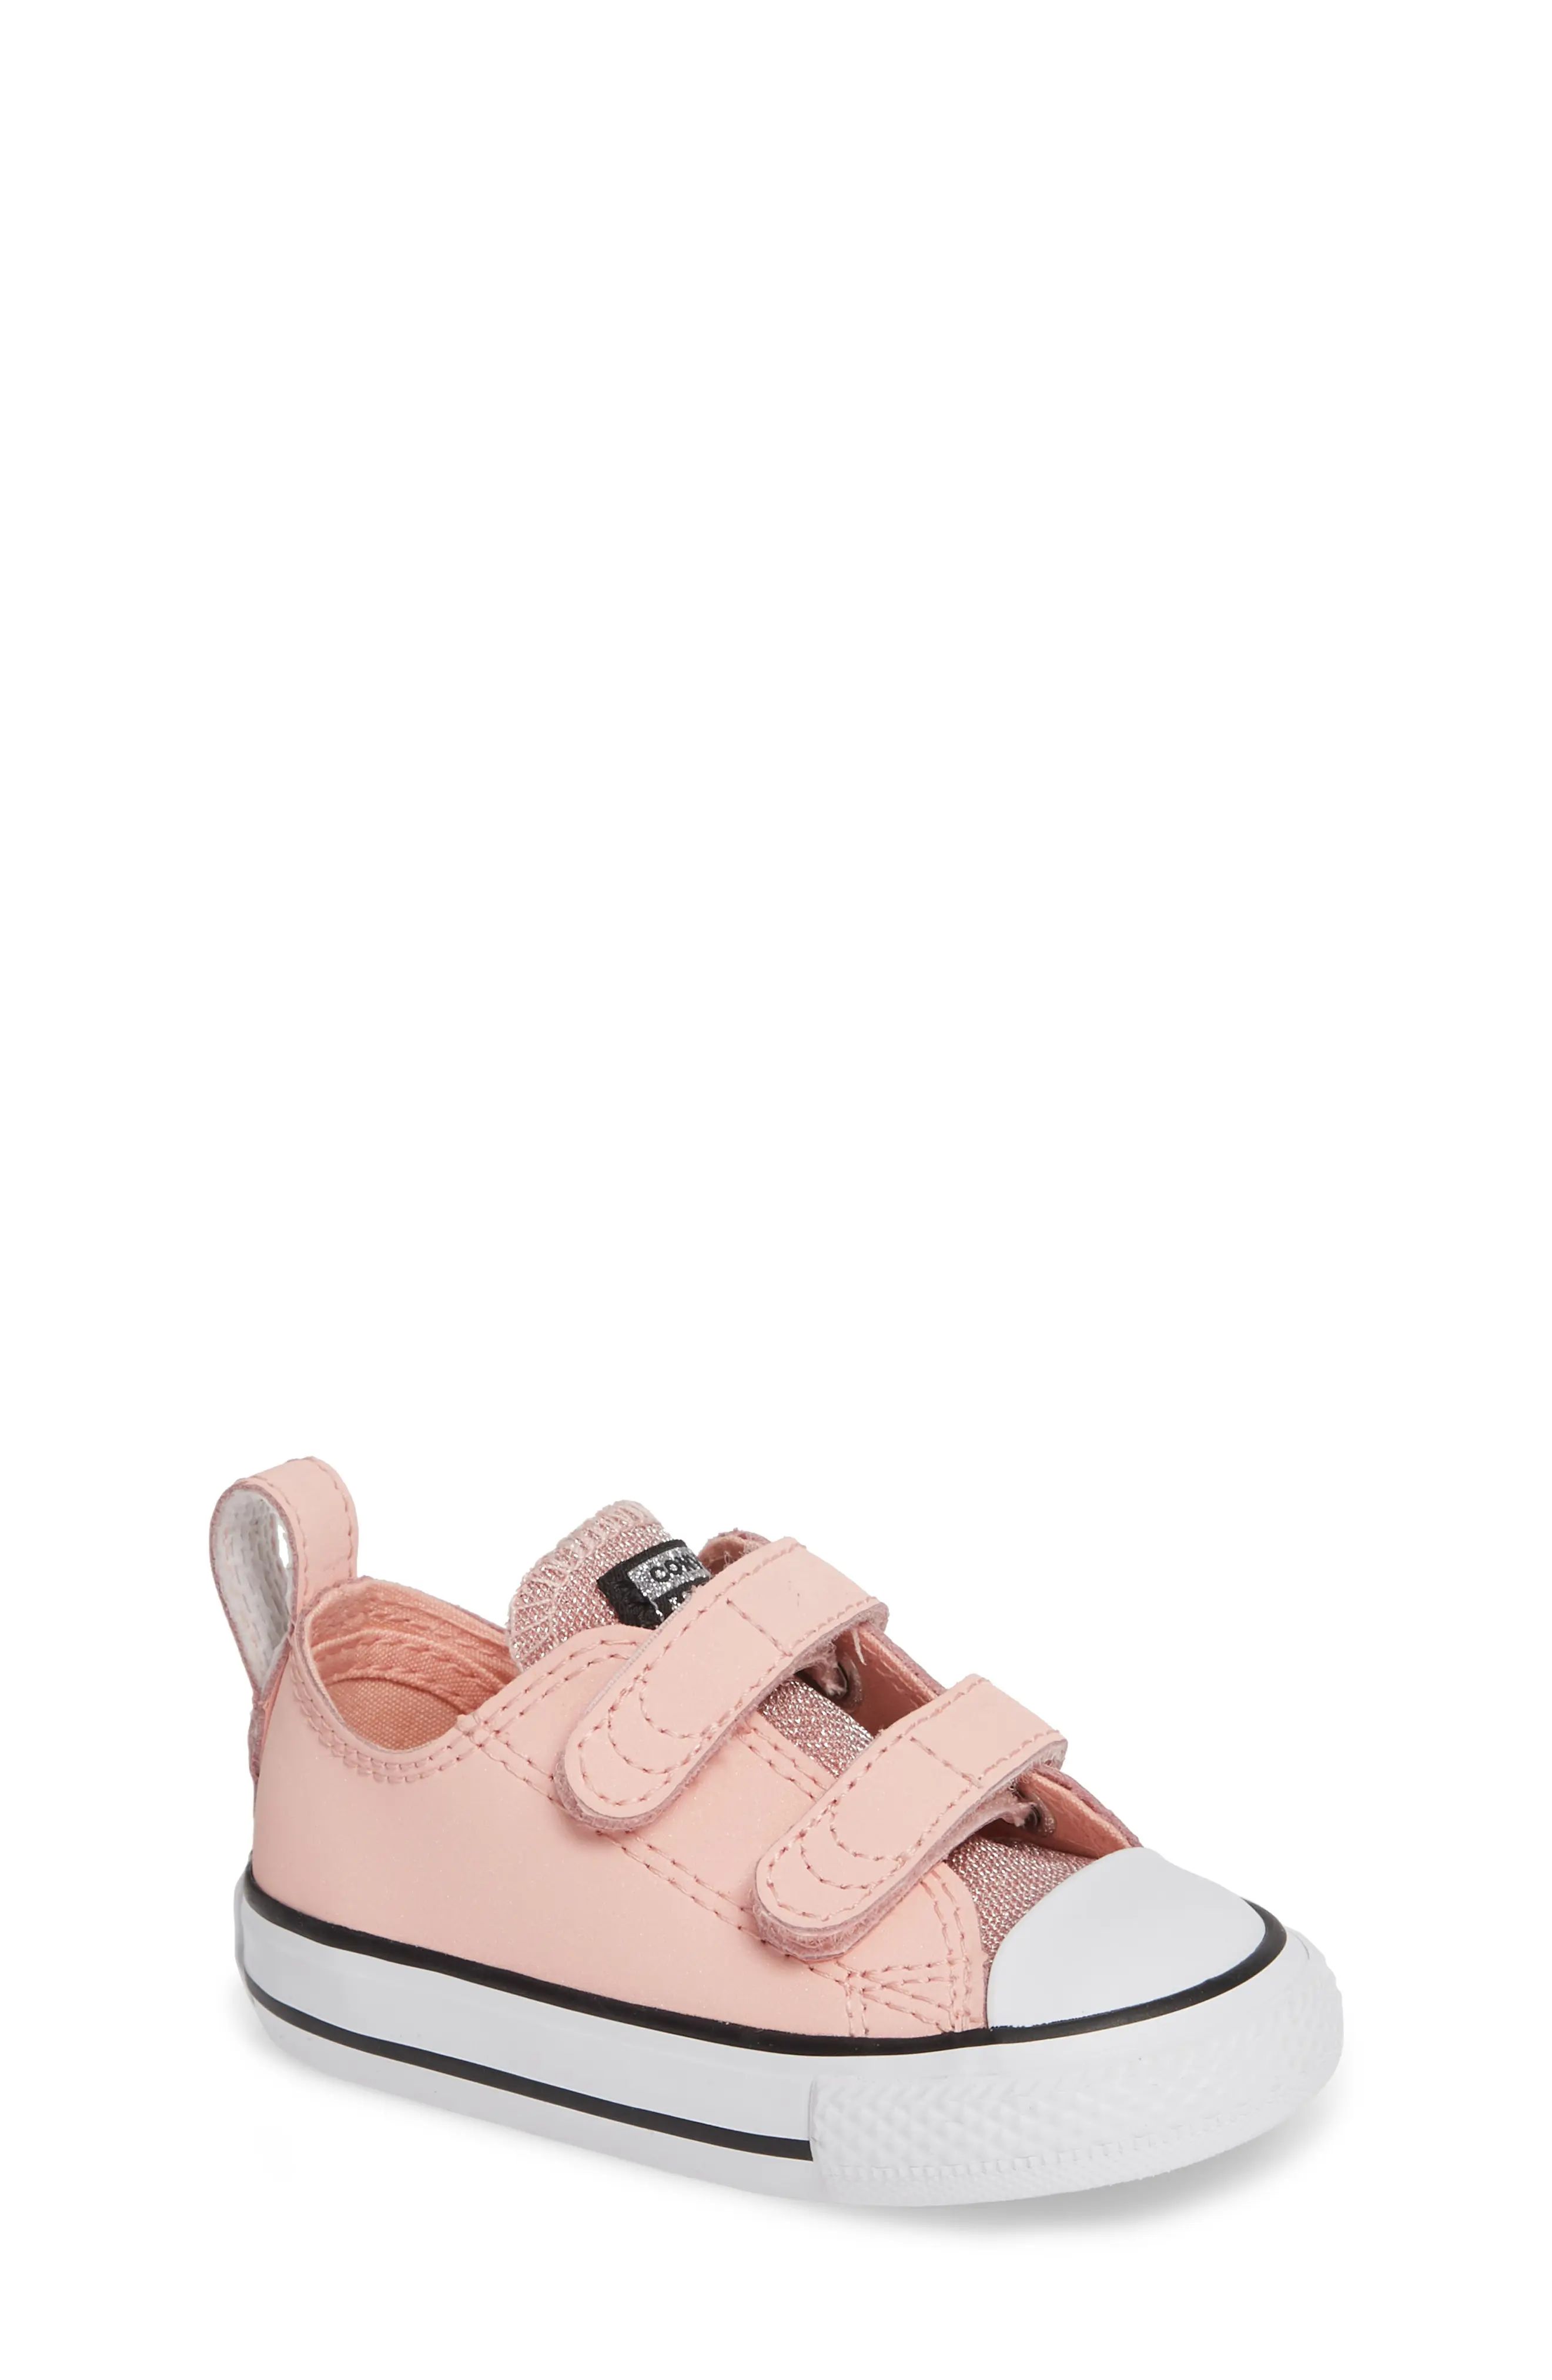 Girl's Converse All Star Seasonal Glitter Sneaker, Size 2 M - Pink | Nordstrom